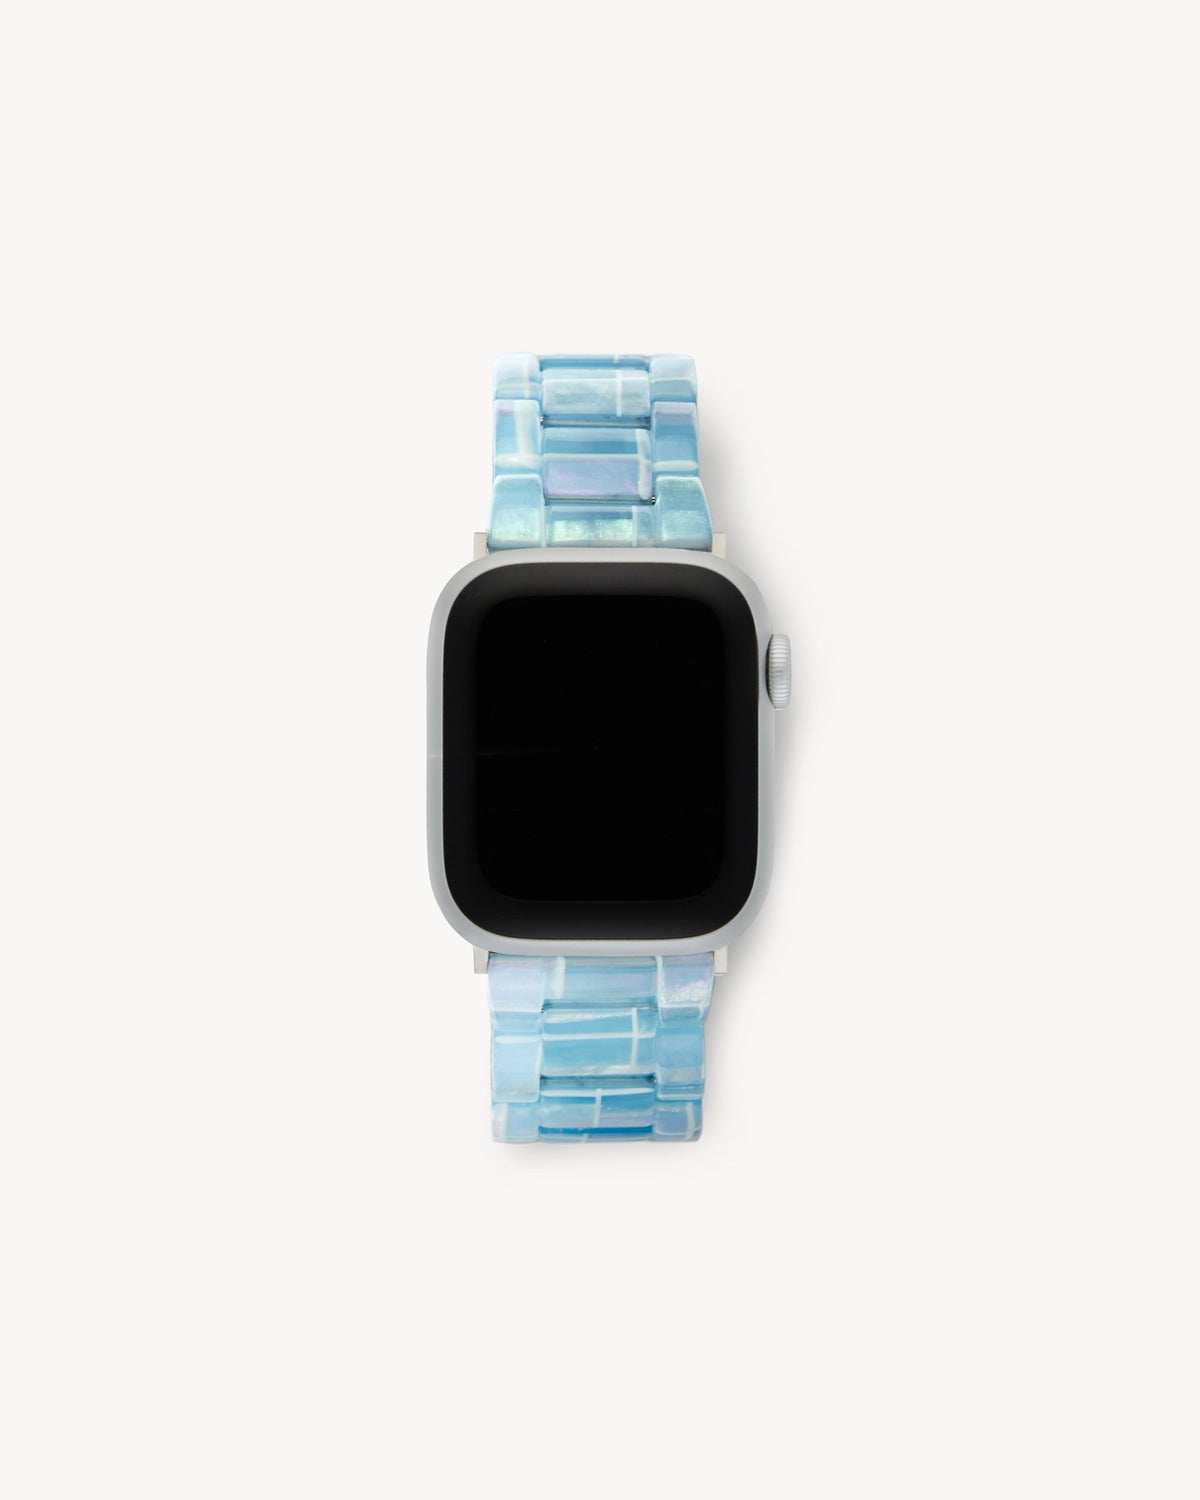 Apple Watch Band in Blue Shell Checker - MACHETE